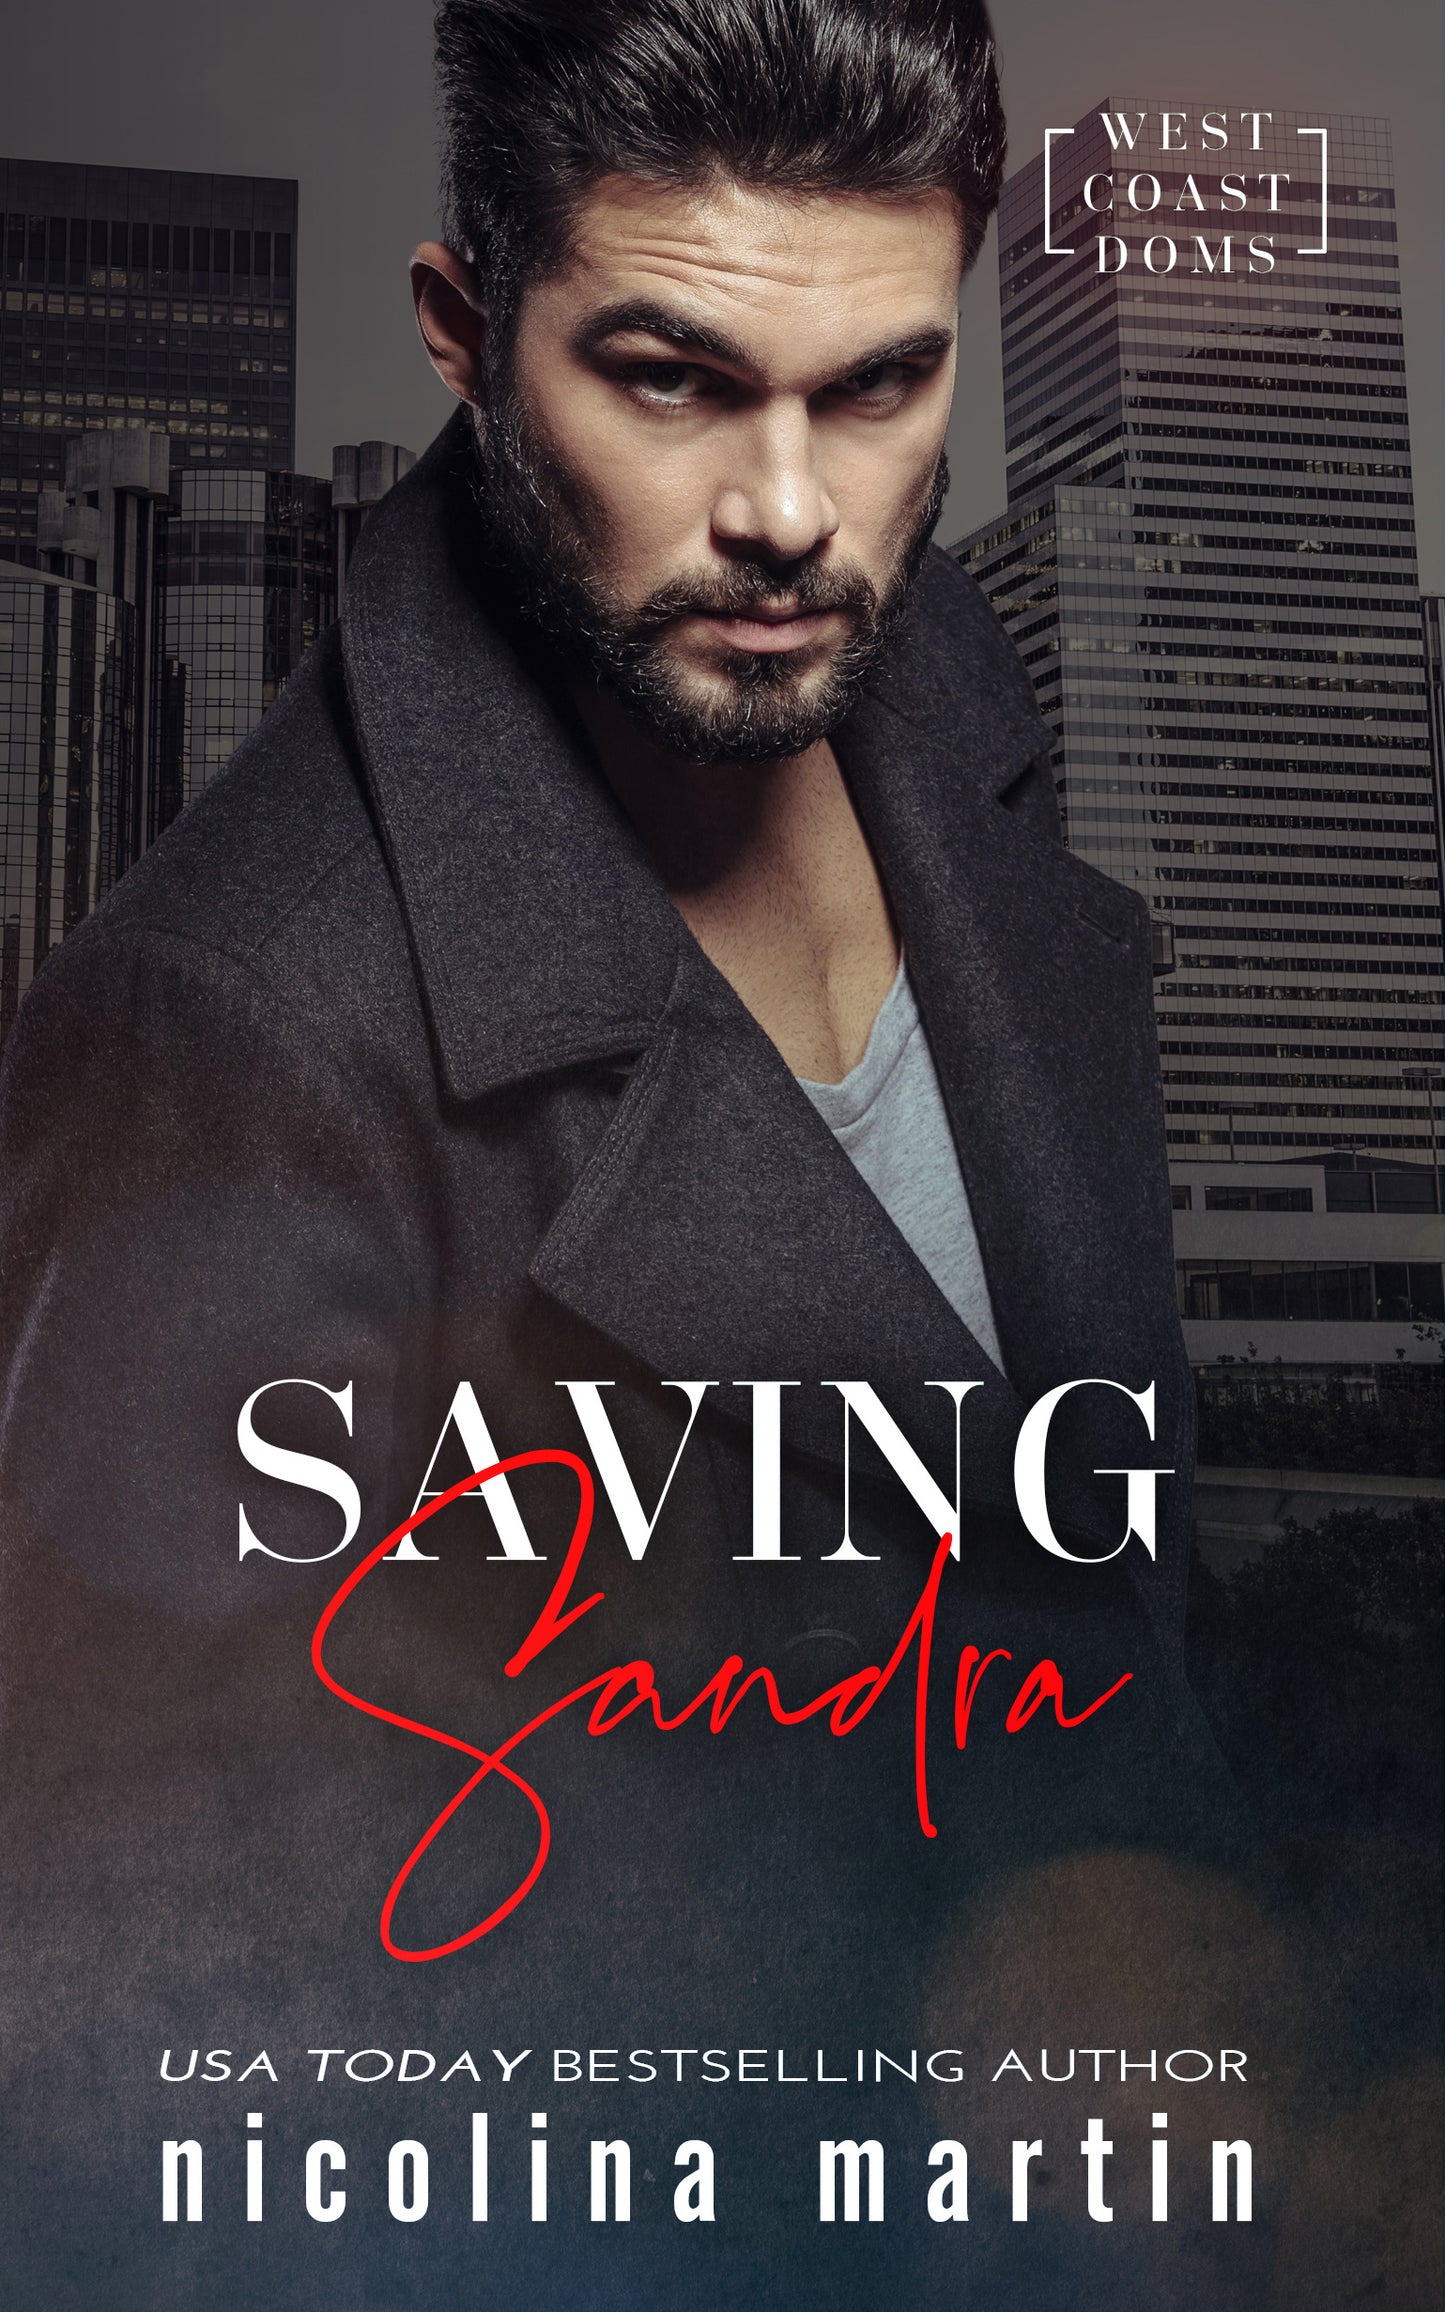 Saving Sandra - West Coast Doms Book 3